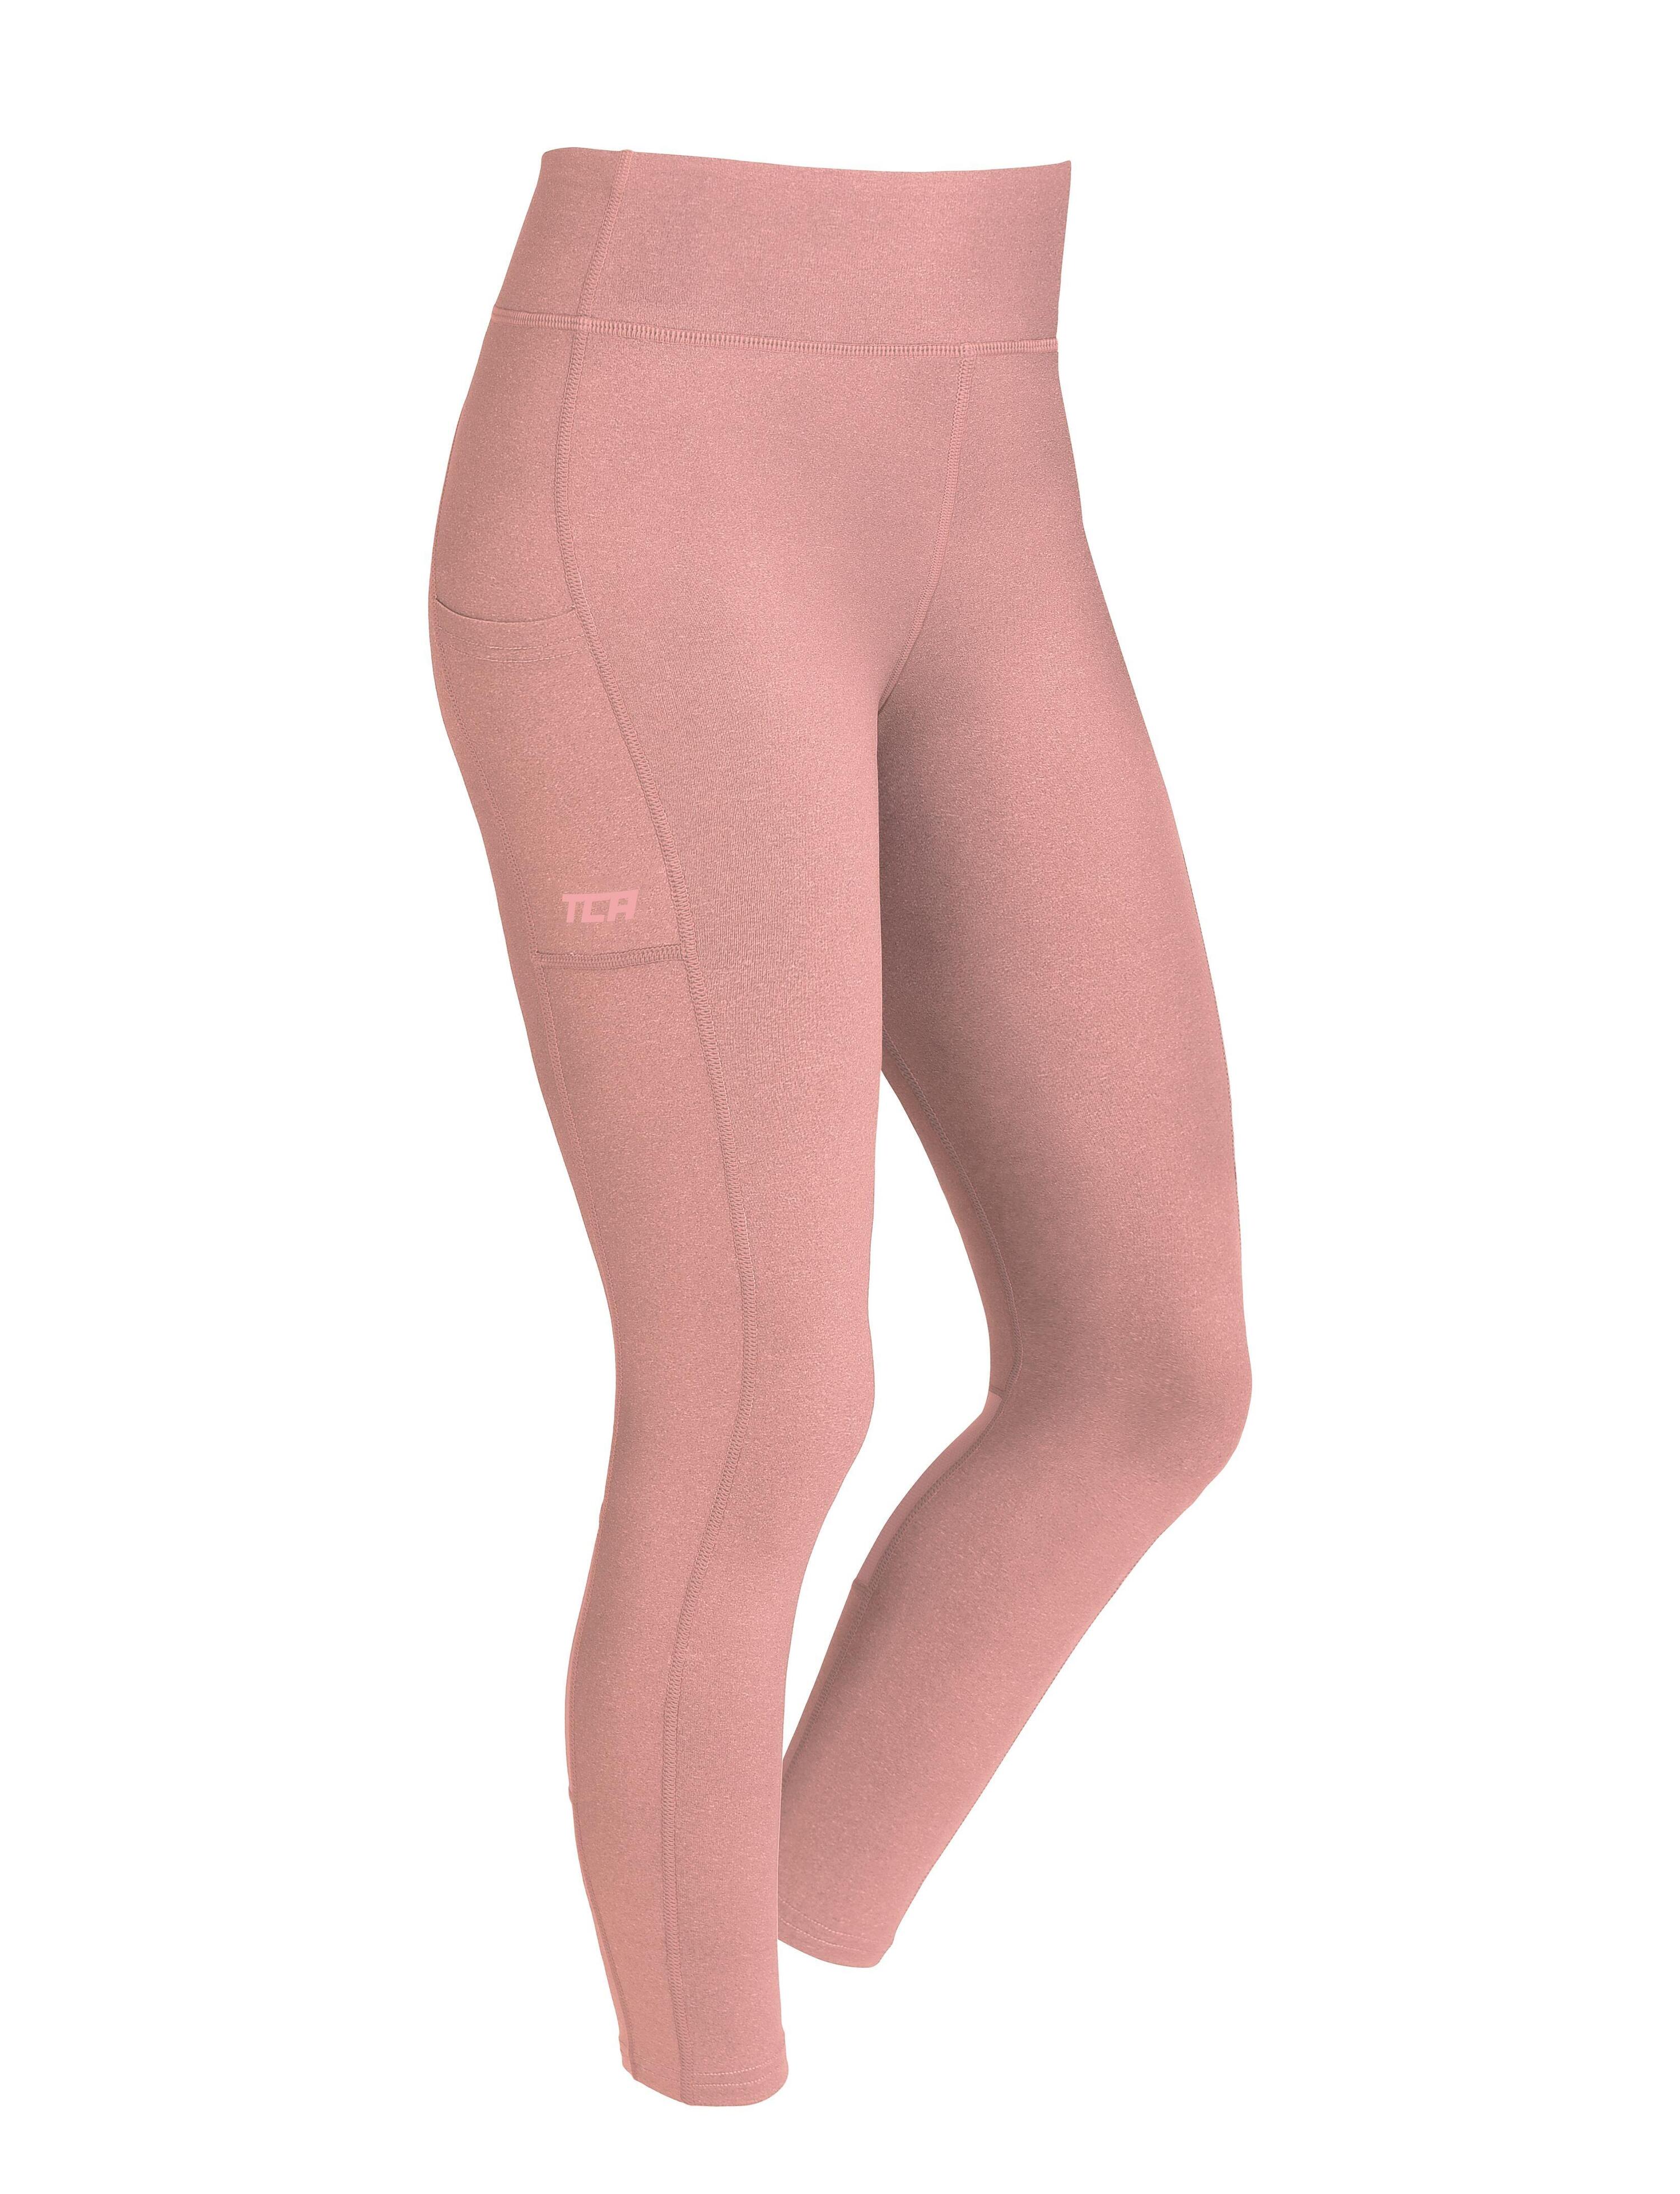 Girls' Super Thermal Base Layer Leggings - Silver Pink Marl 1/4